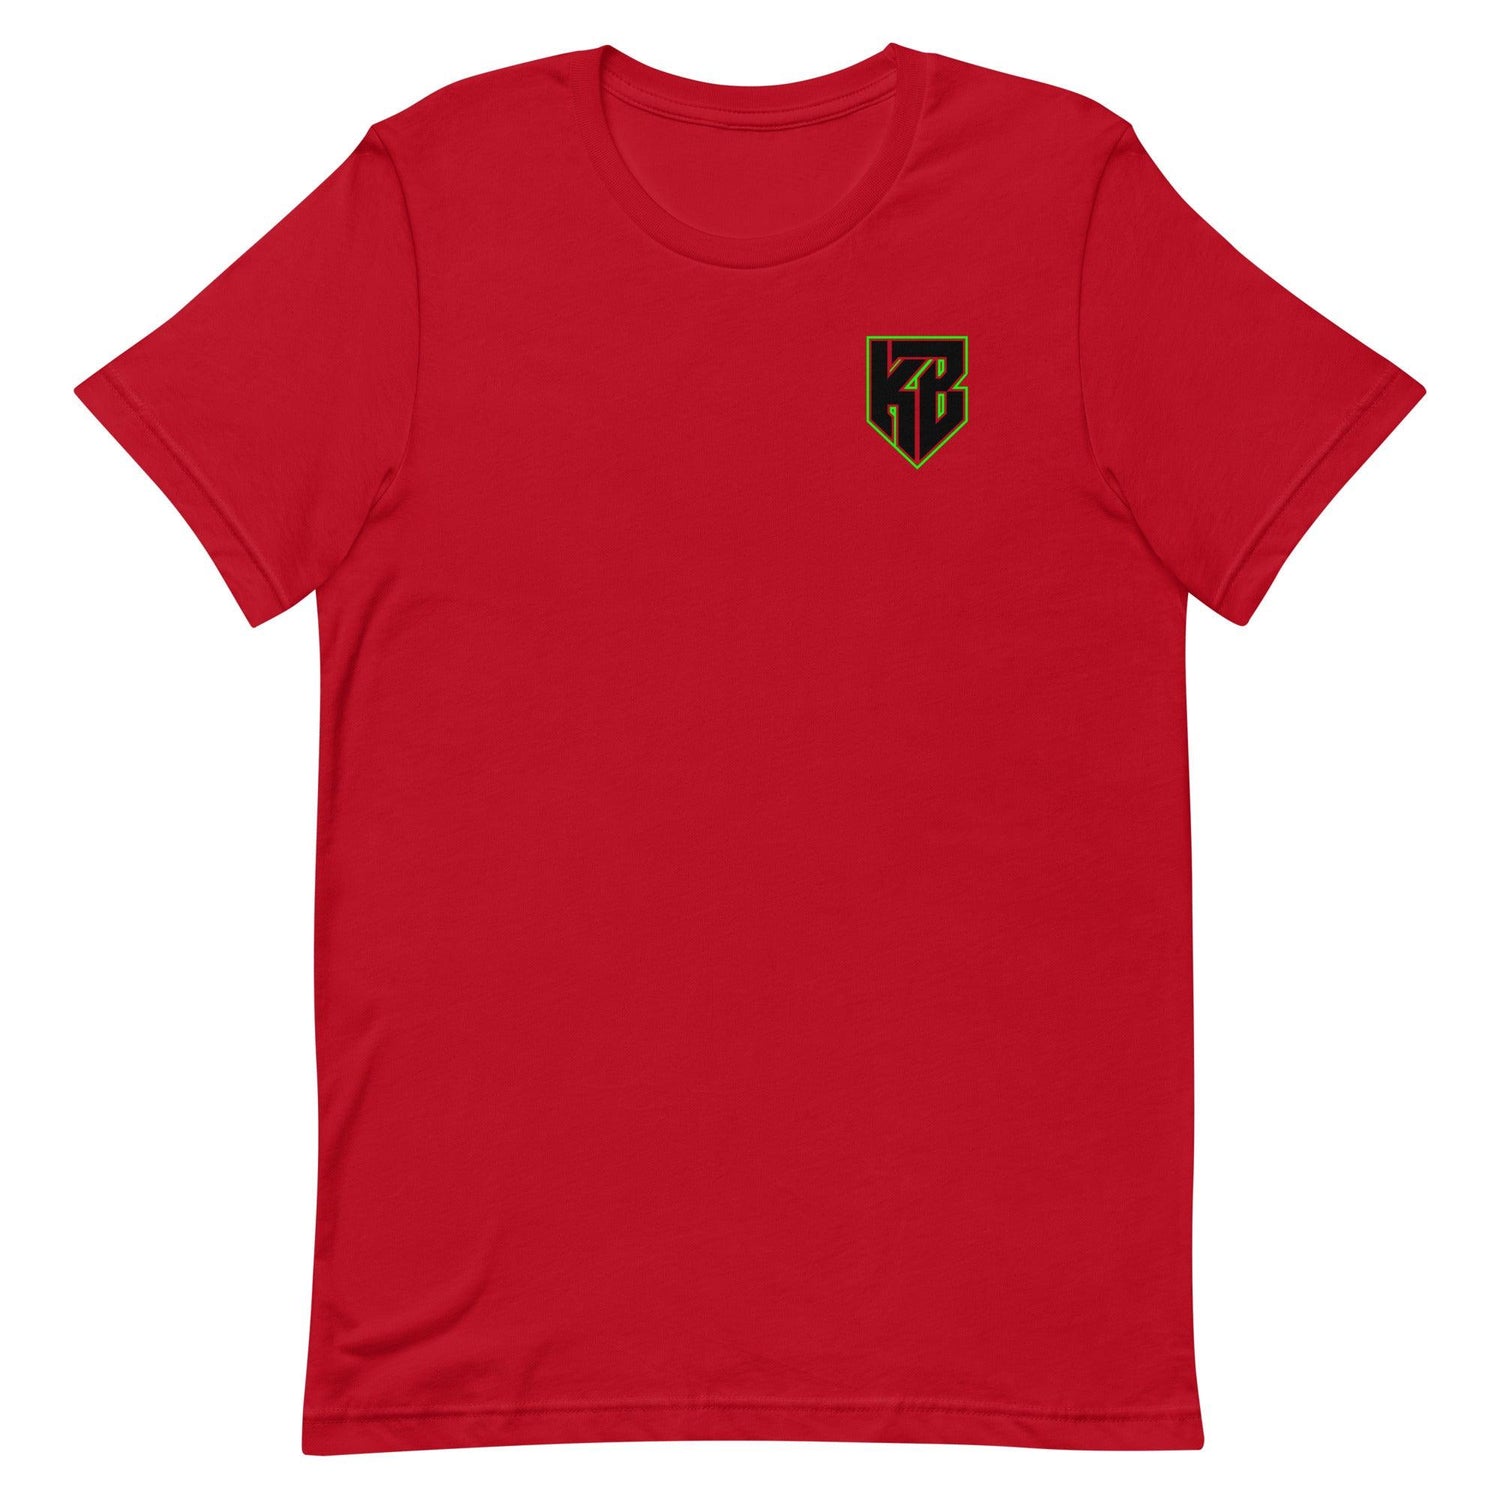 Kendell Brooks "KB" t-shirt - Fan Arch